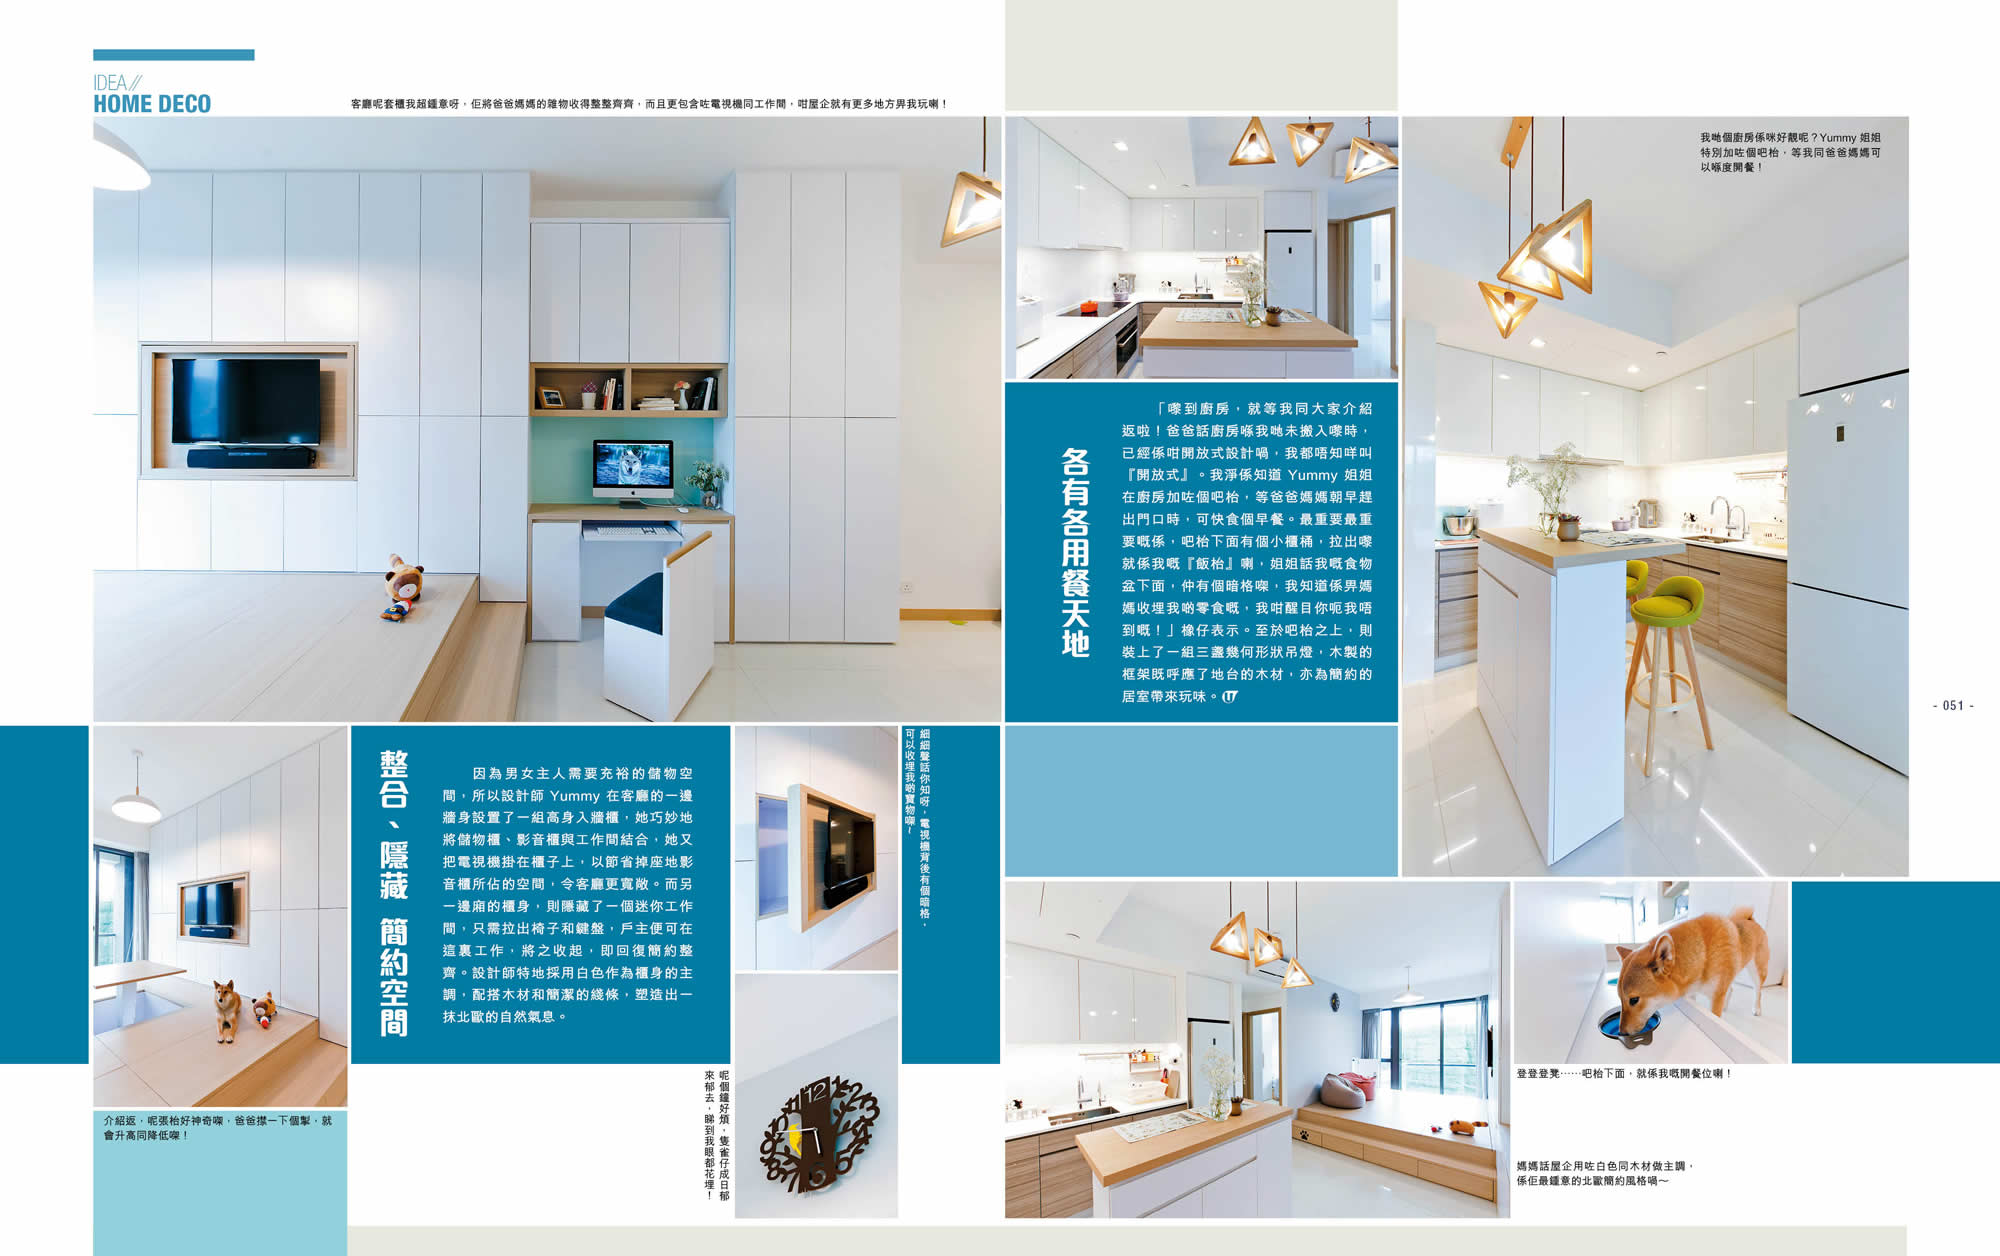 U Magazine - Home Deco (Home Sweet Home) 2